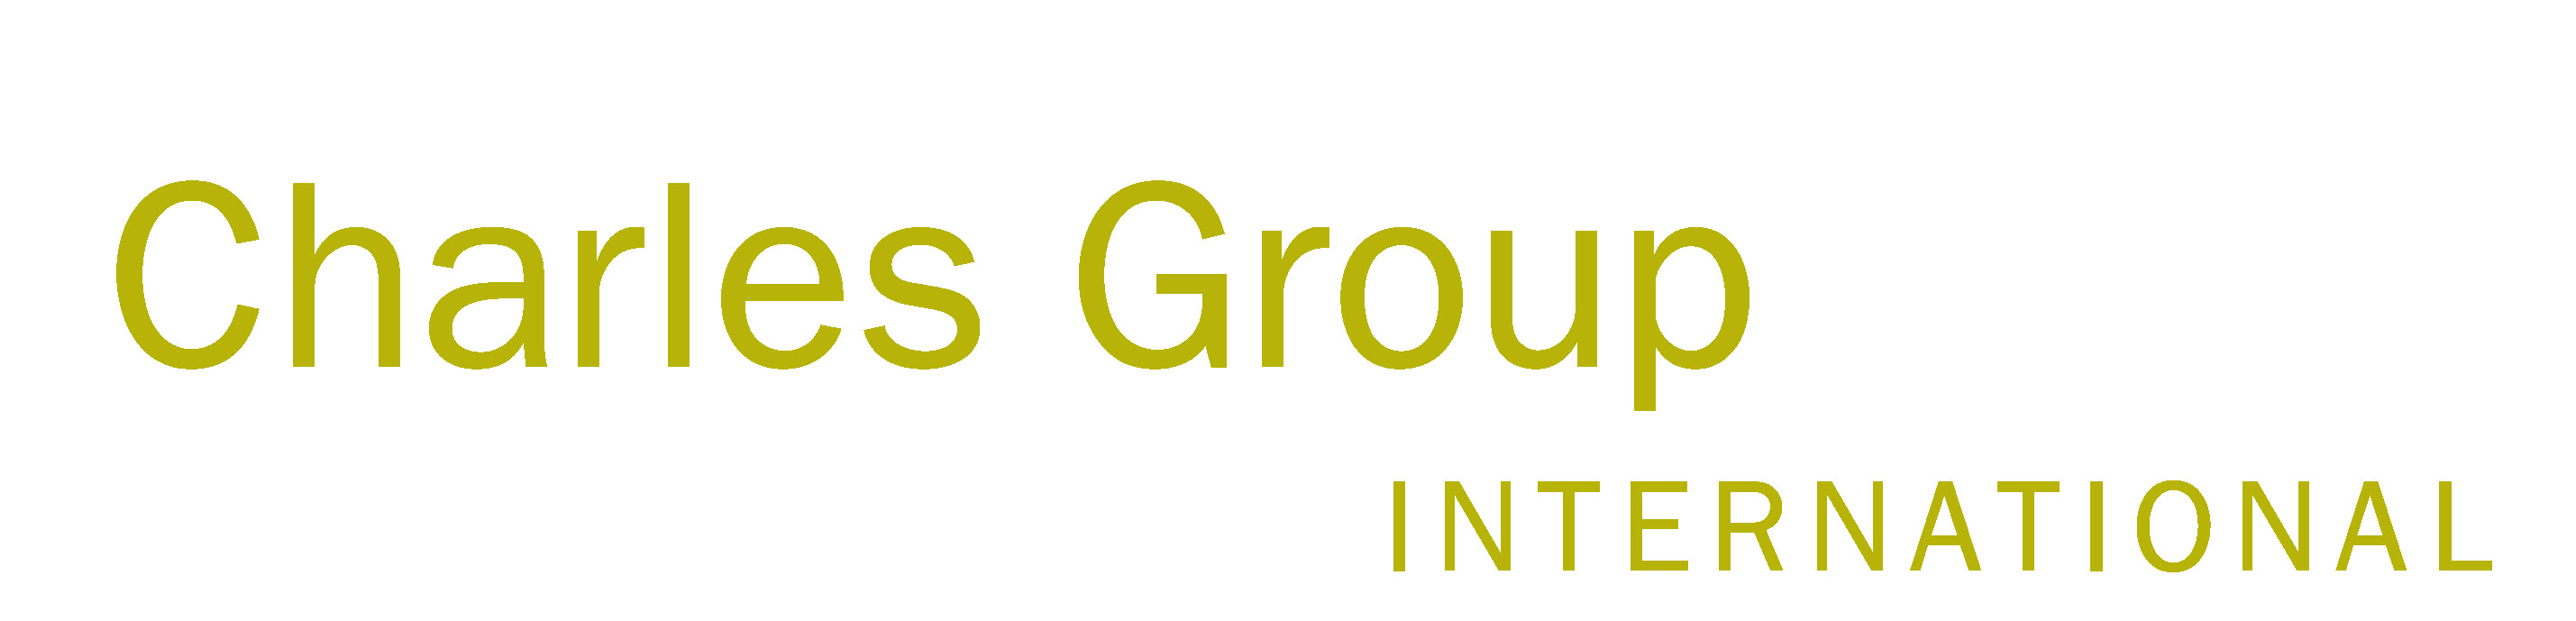 Charles Group International Logo